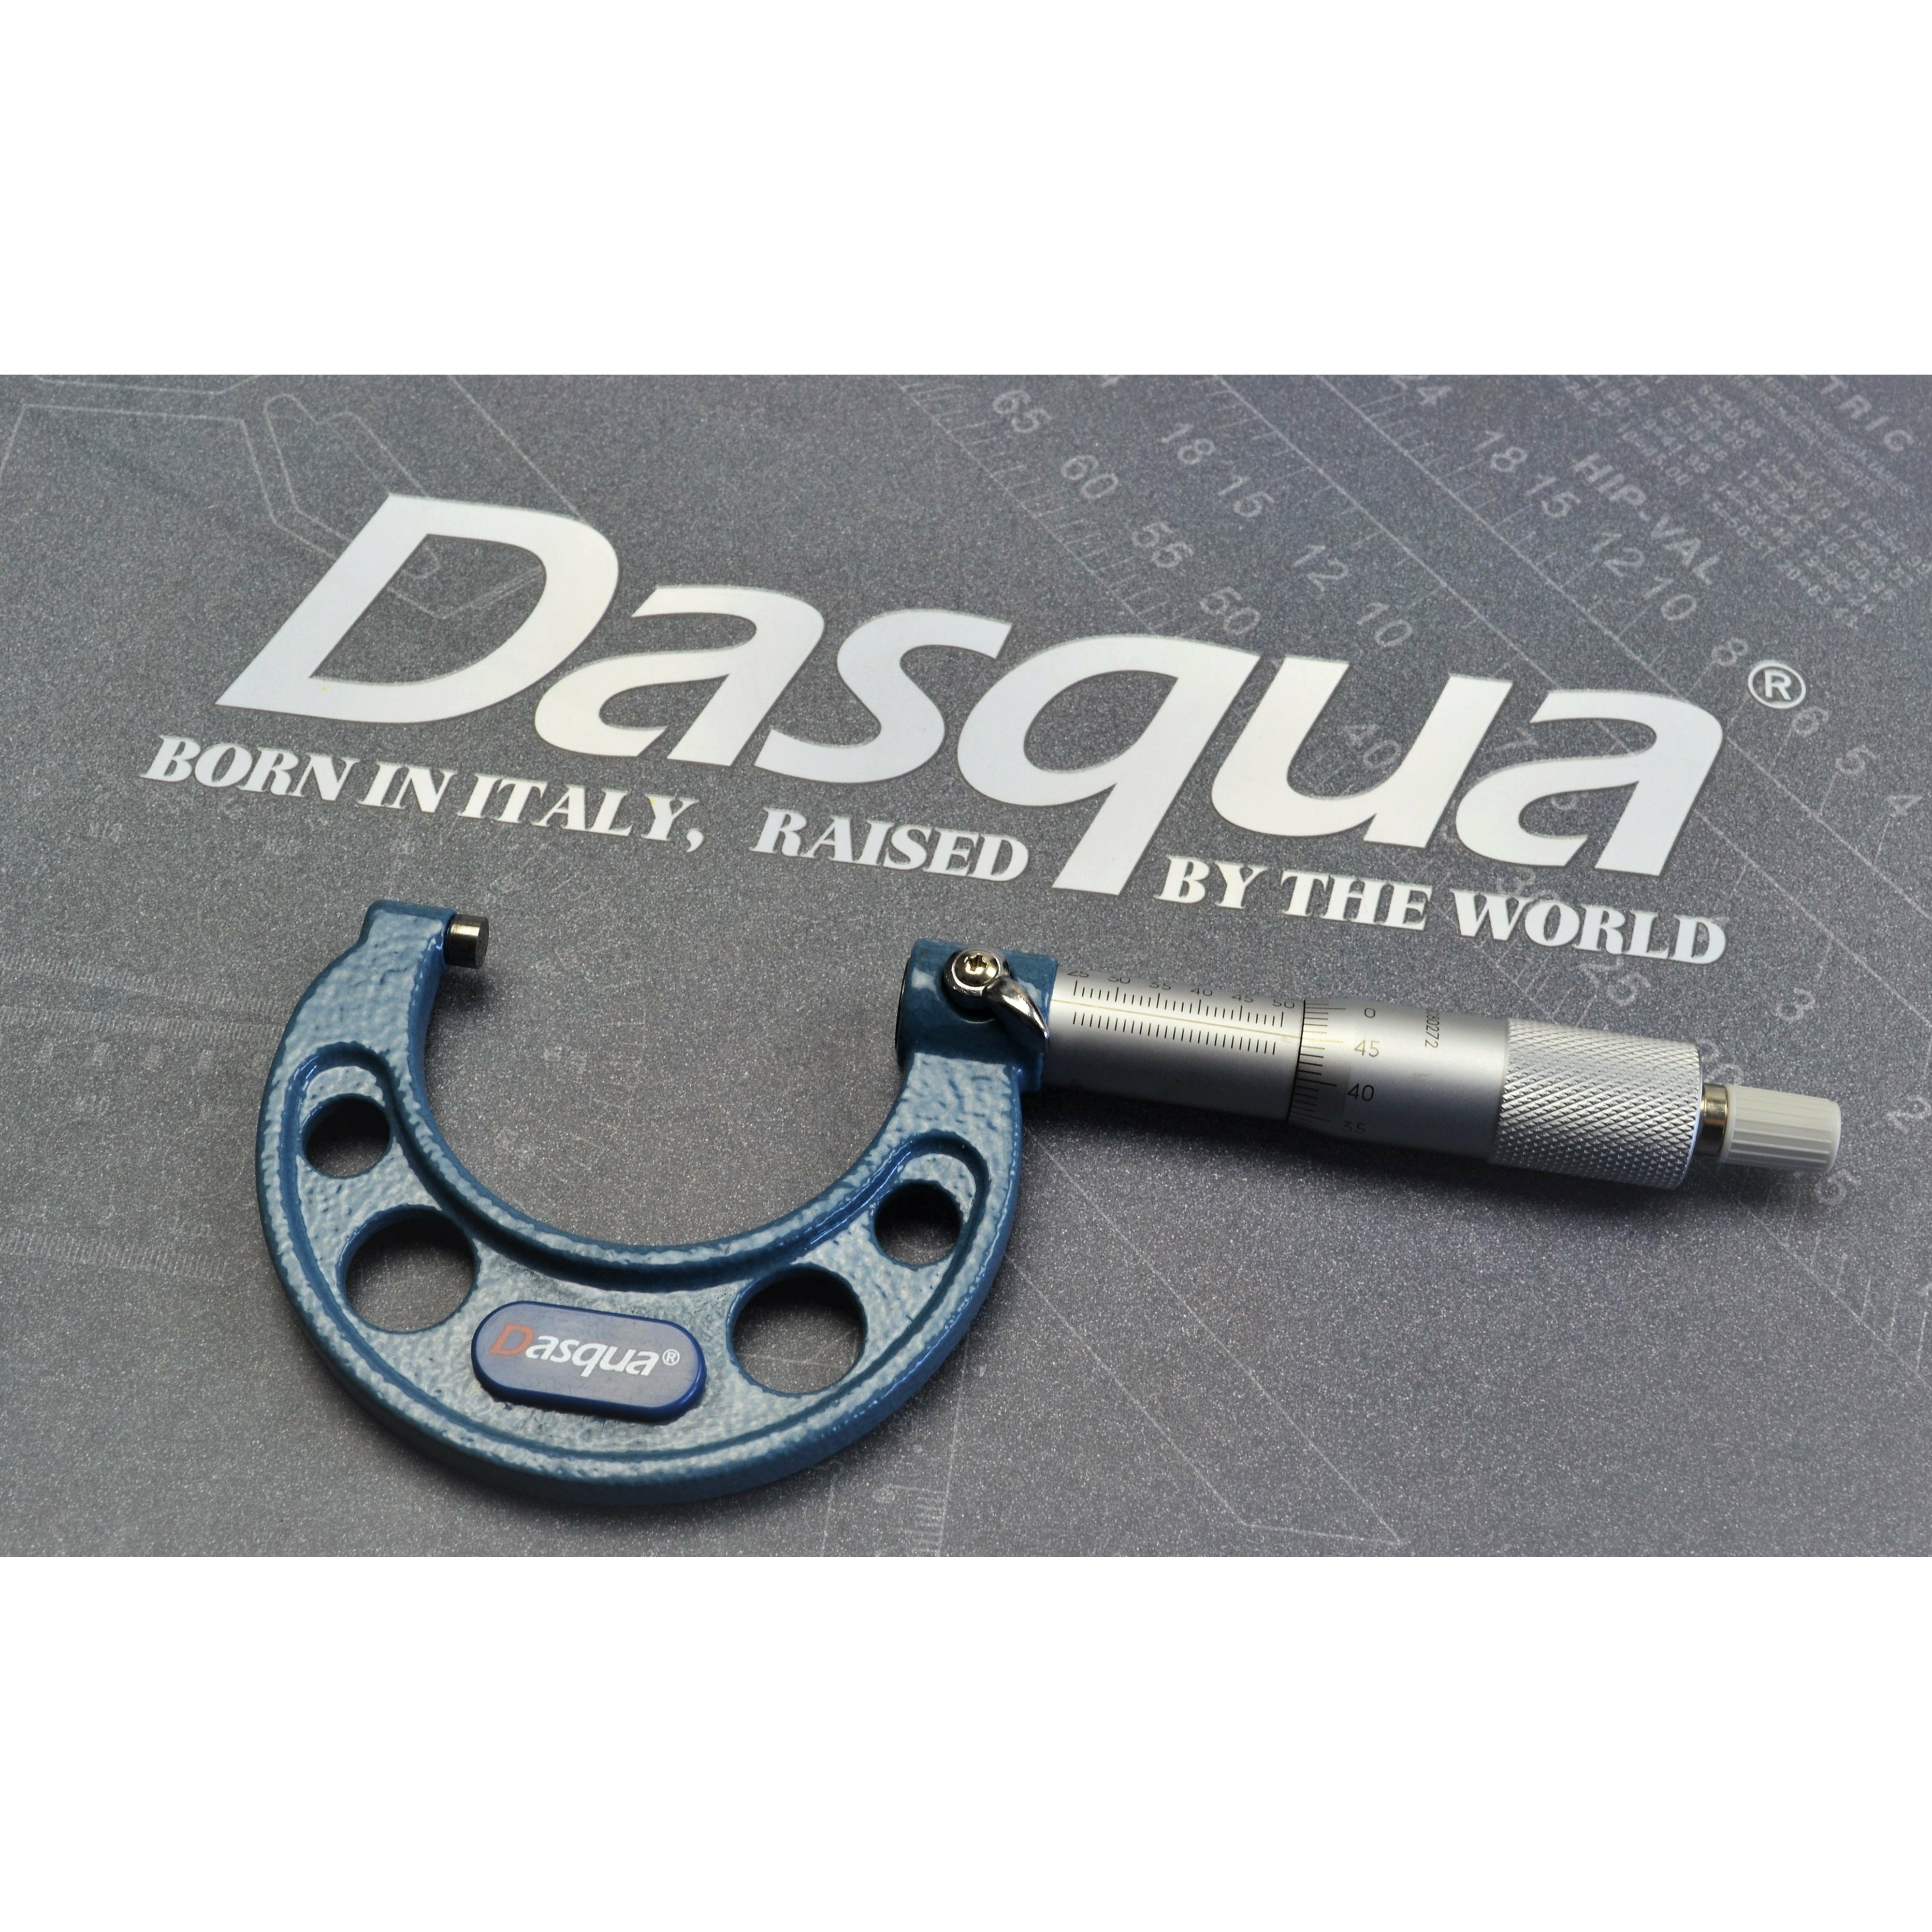  Dasqua Outside Micrometer 25-50 mm Series 4111-8110A